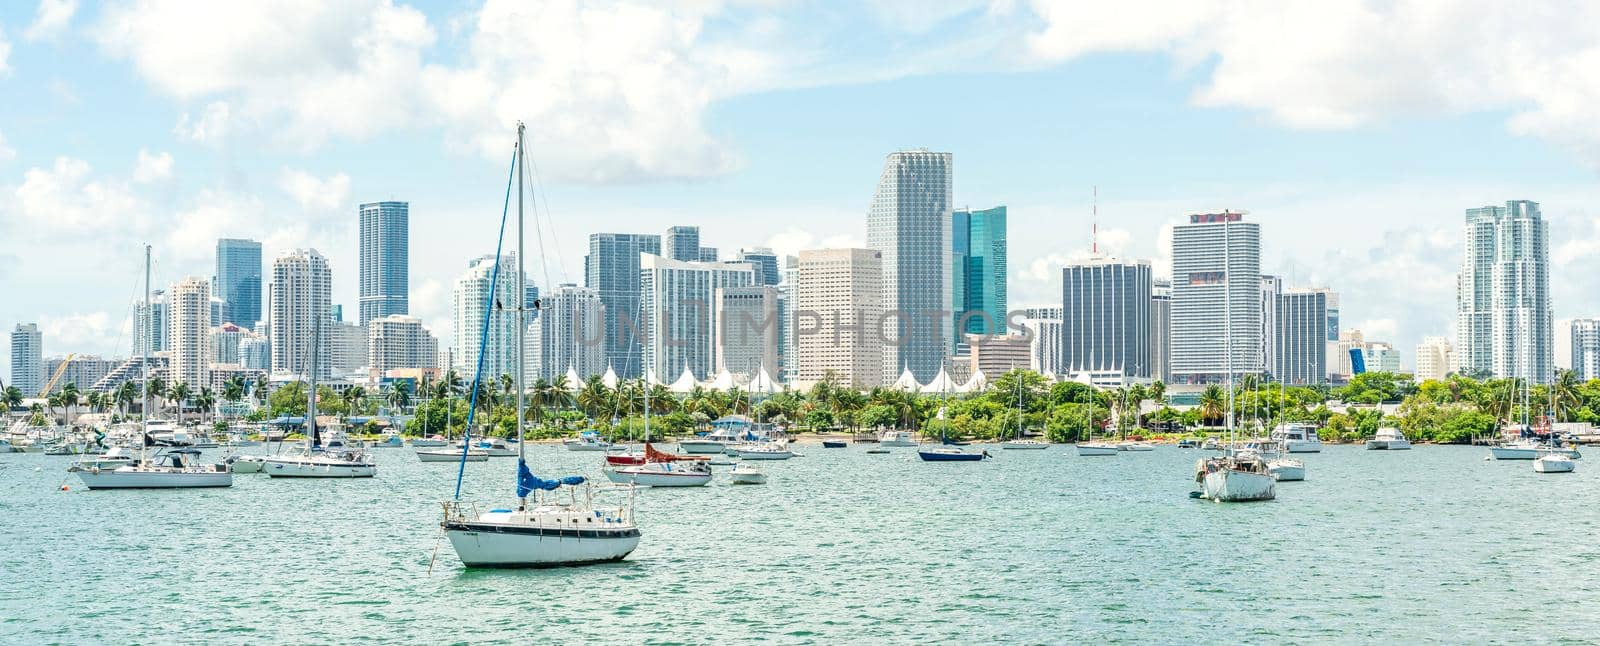 Miami, USA - September 11, 2019: Sailboats in Biscayne Bay with Miami Skyline by Mariakray